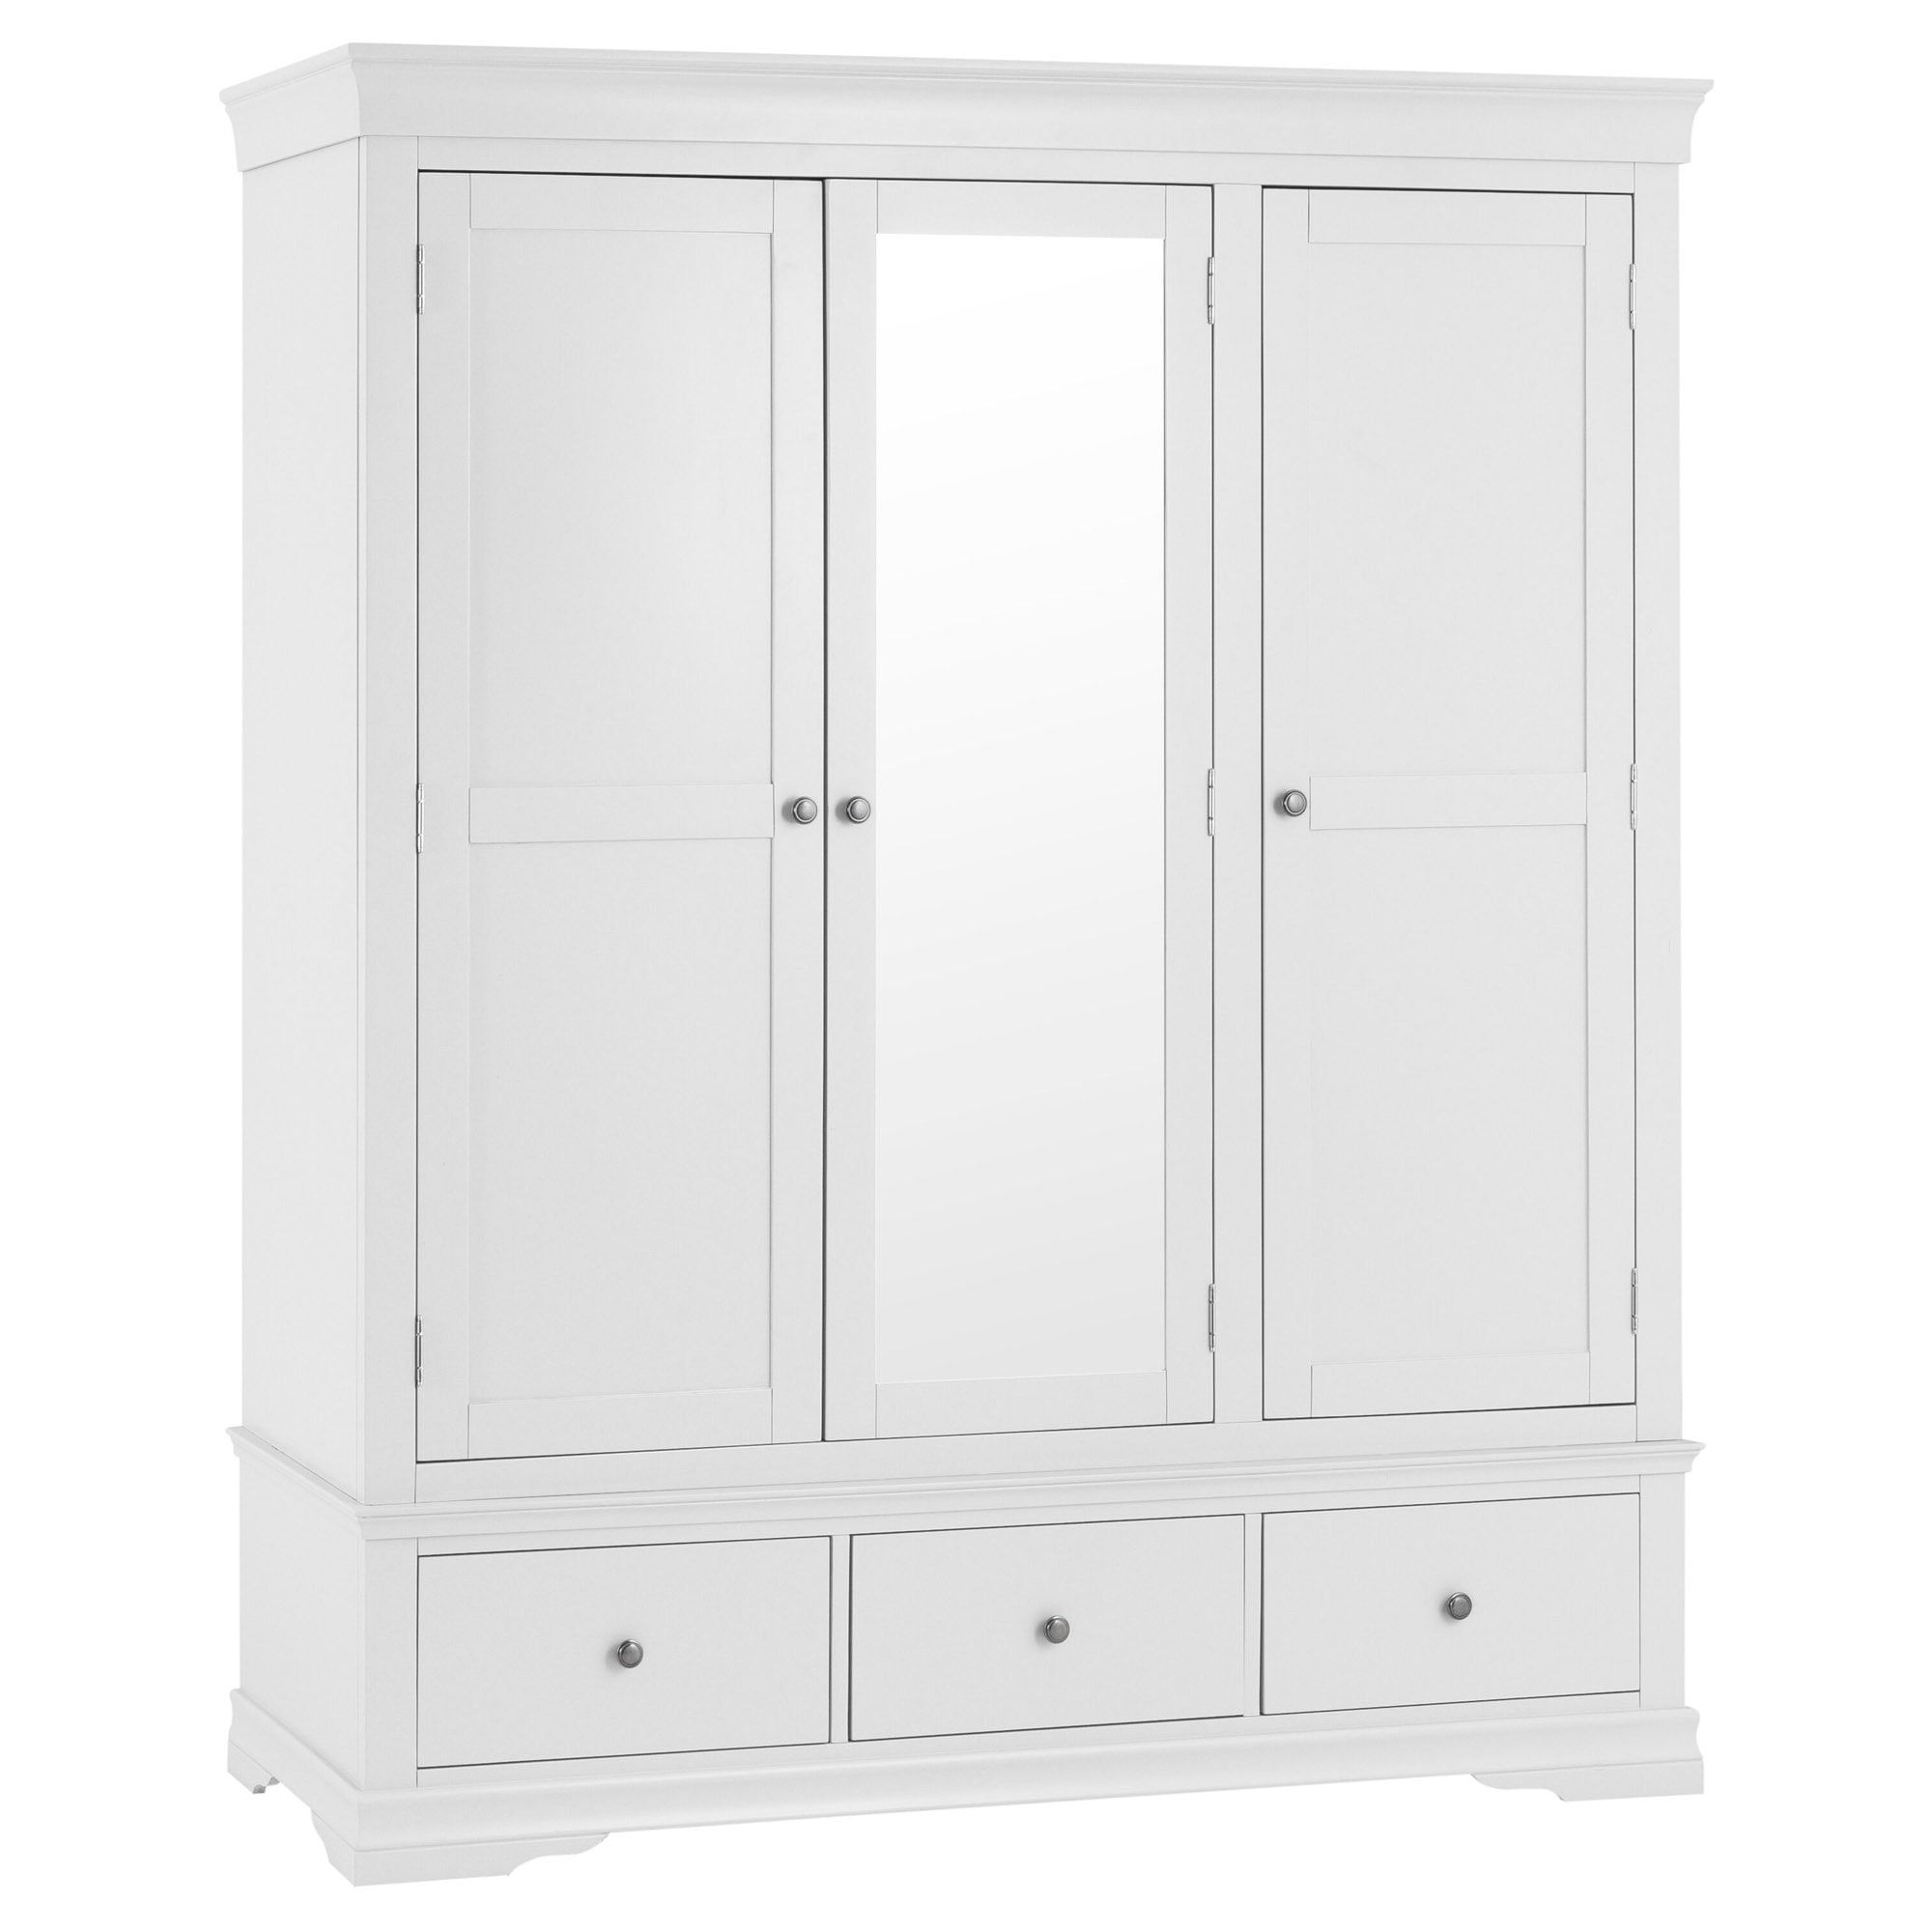 Swindon White 3 Door 3 Drawer Wardrobe | White Wardrobe | White Wooden  Wardrobe With Regard To White Wood Wardrobes (View 6 of 15)